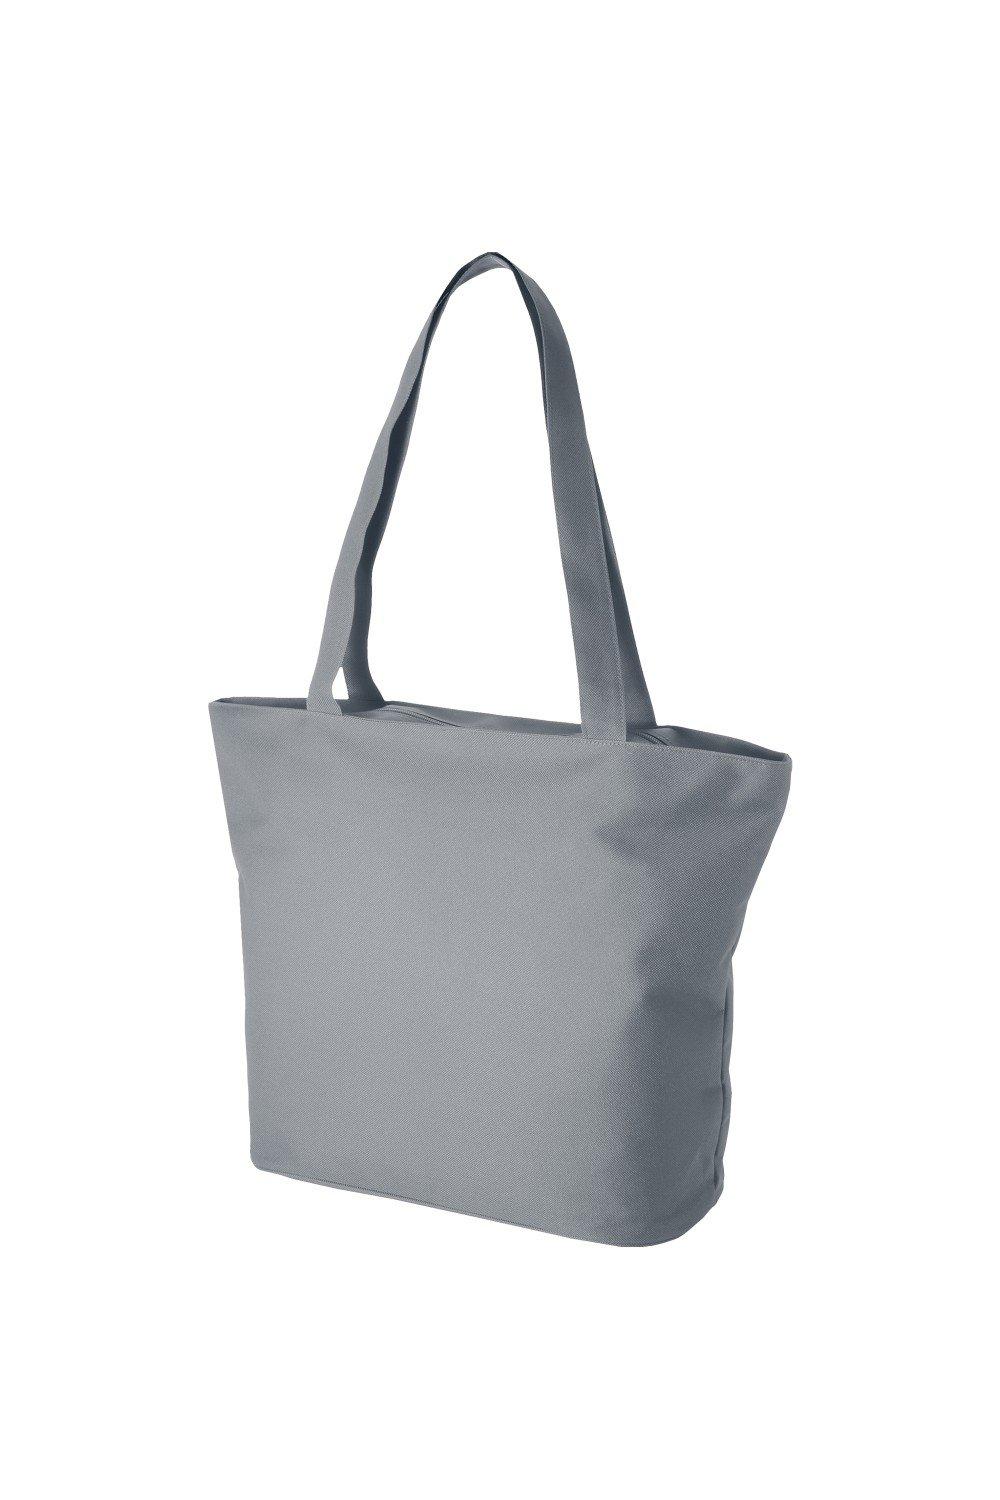 Пляжная сумка-тоут Panama (2 шт.) Bullet, серый цена и фото